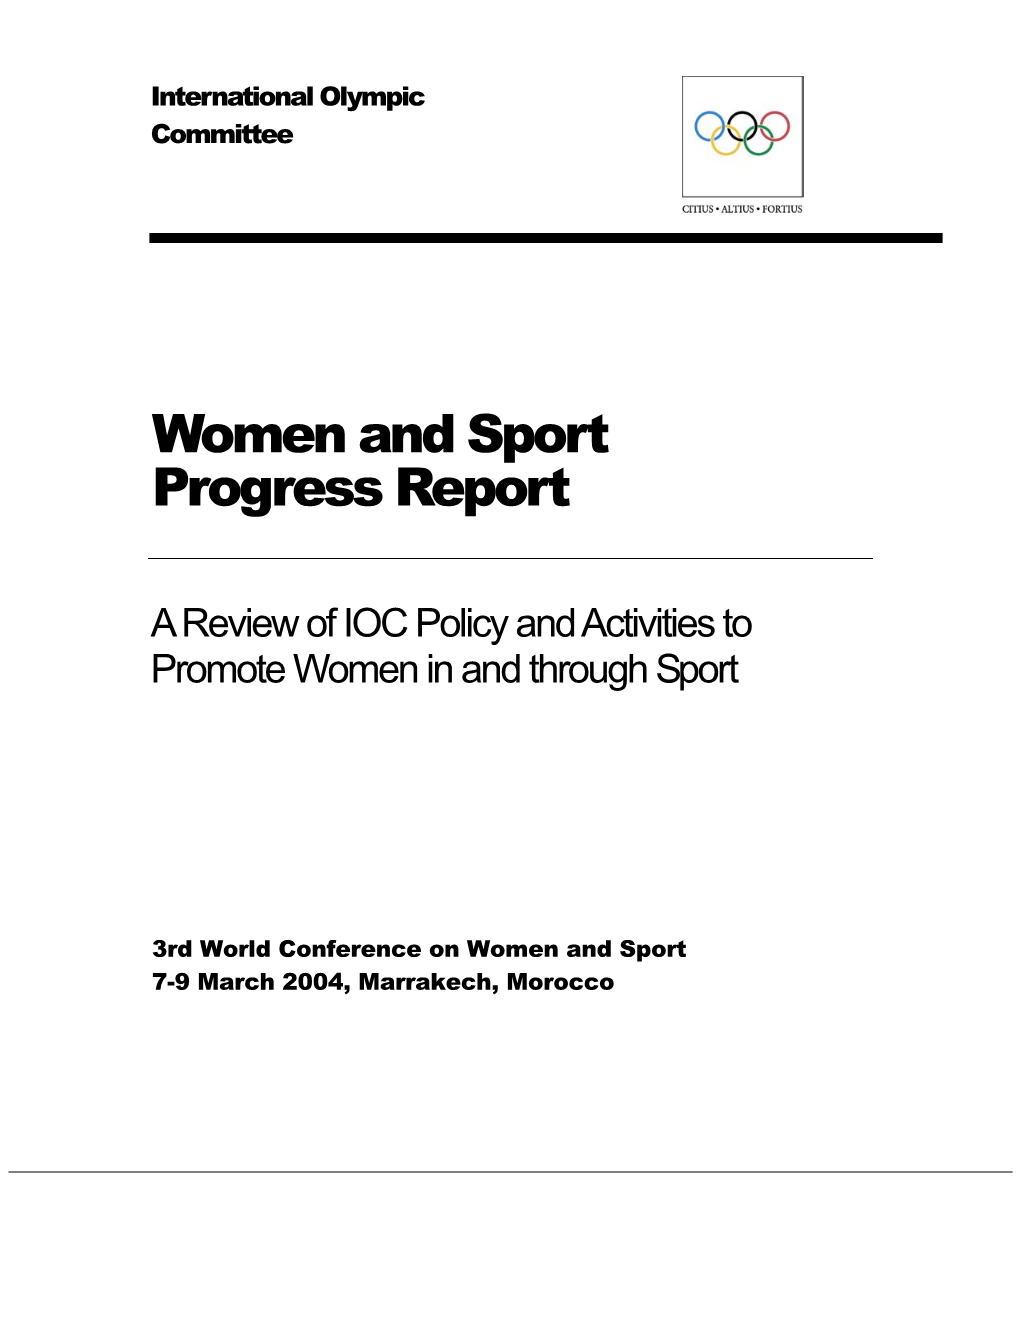 Women and Sport Progress Report